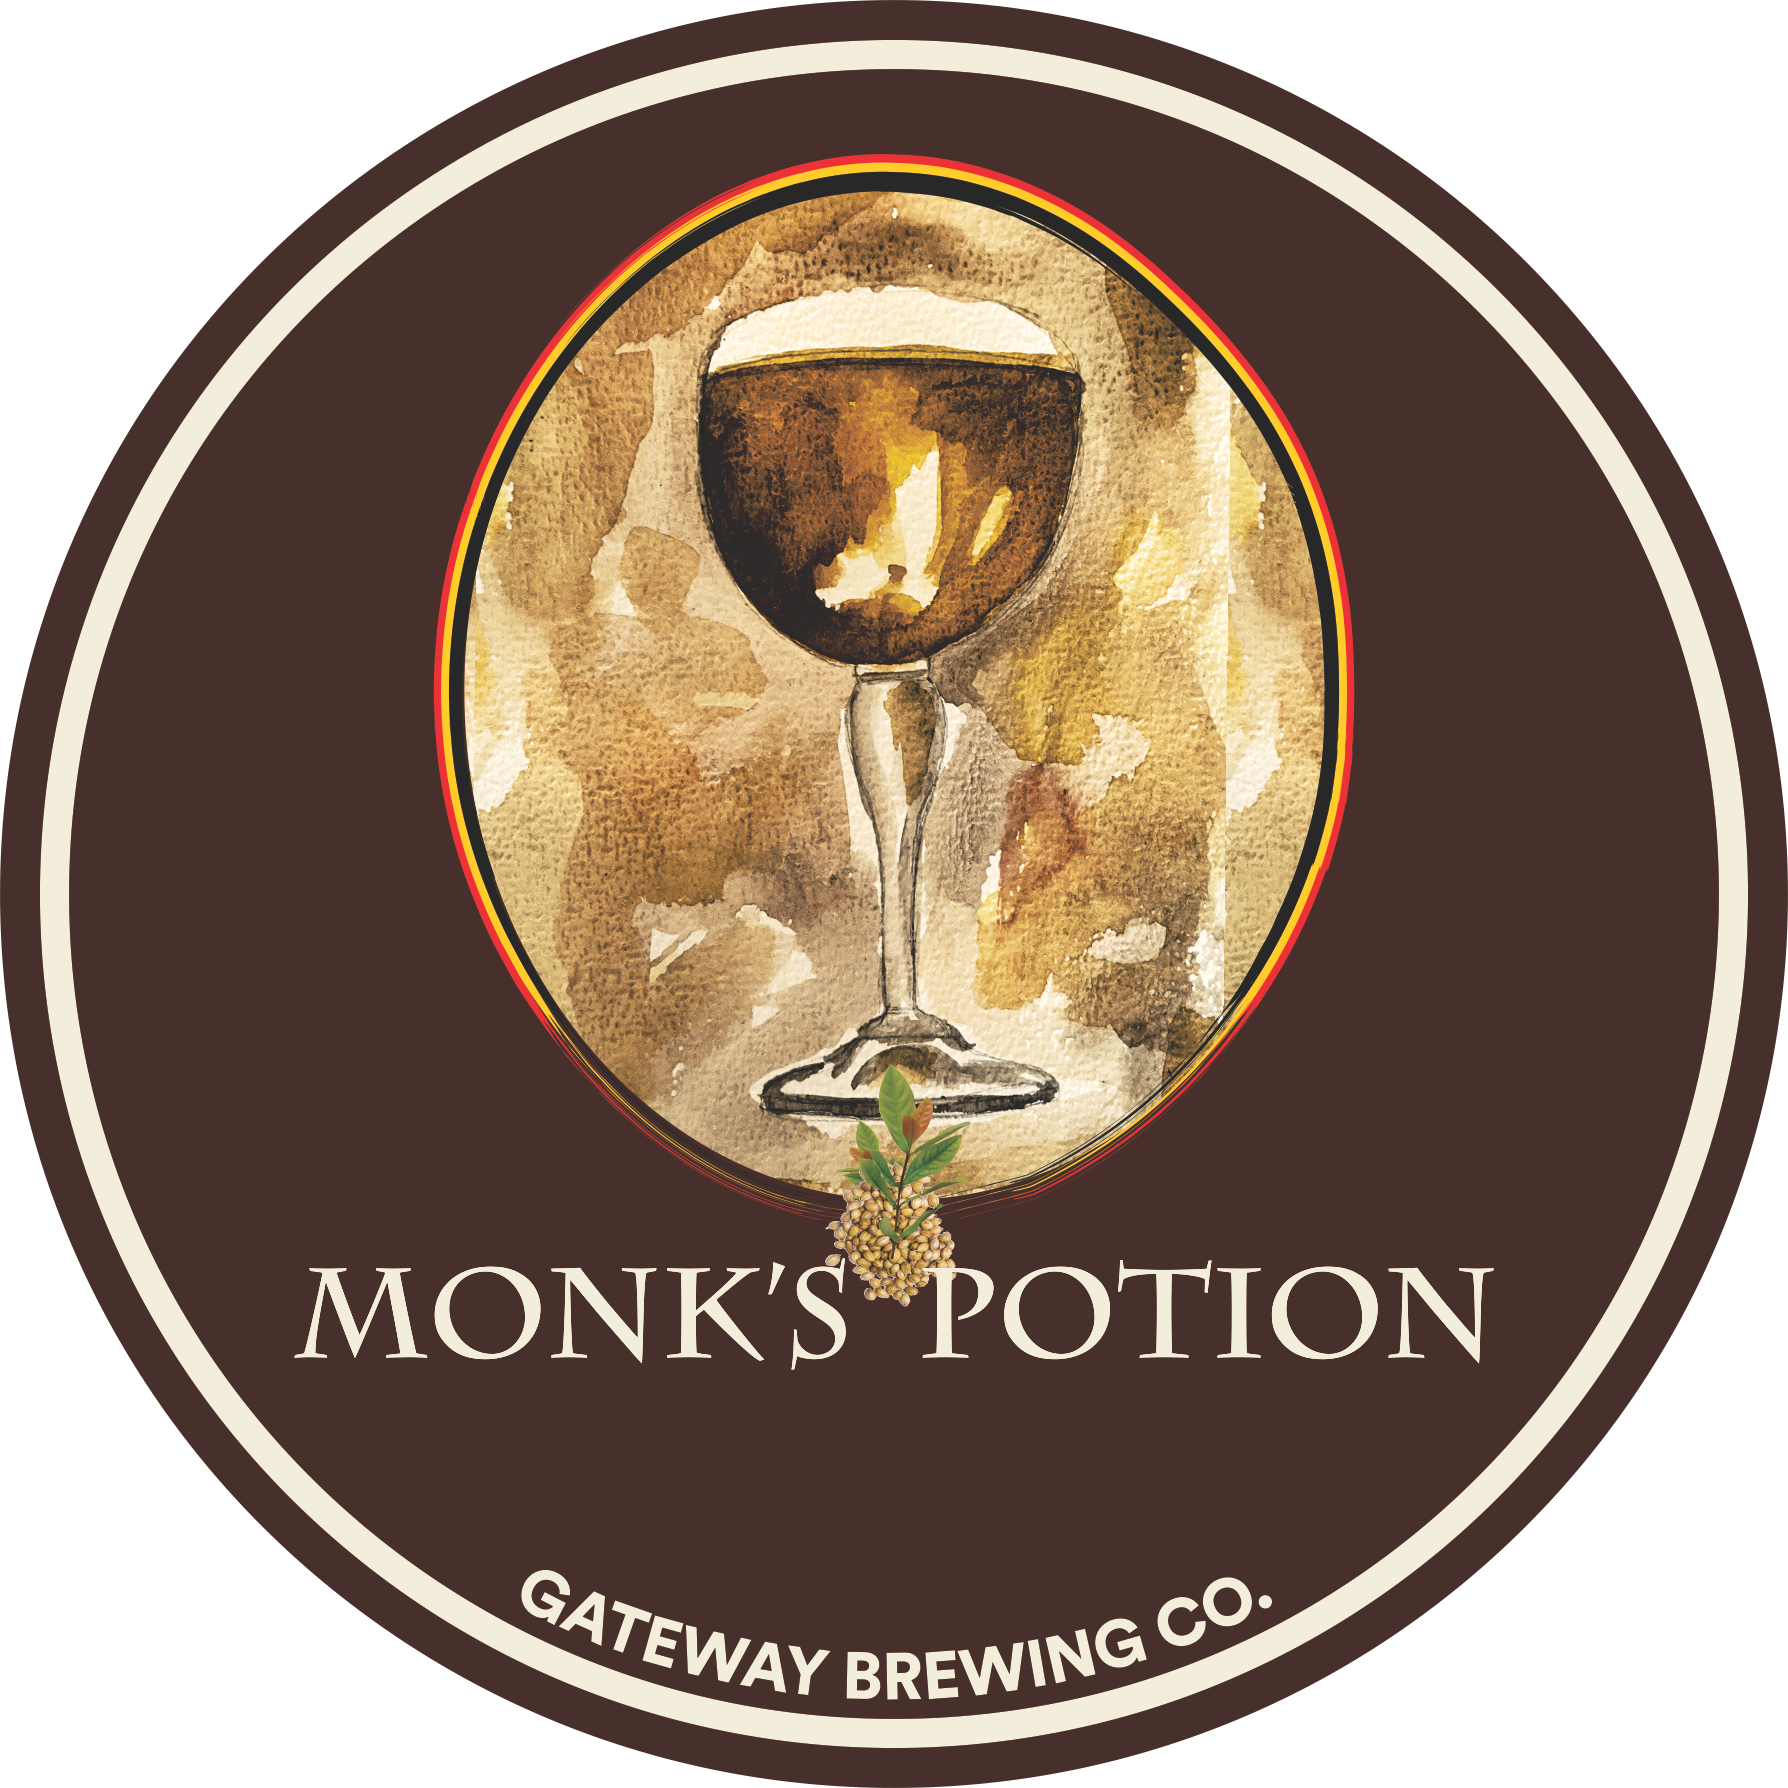 Monk’s Potion